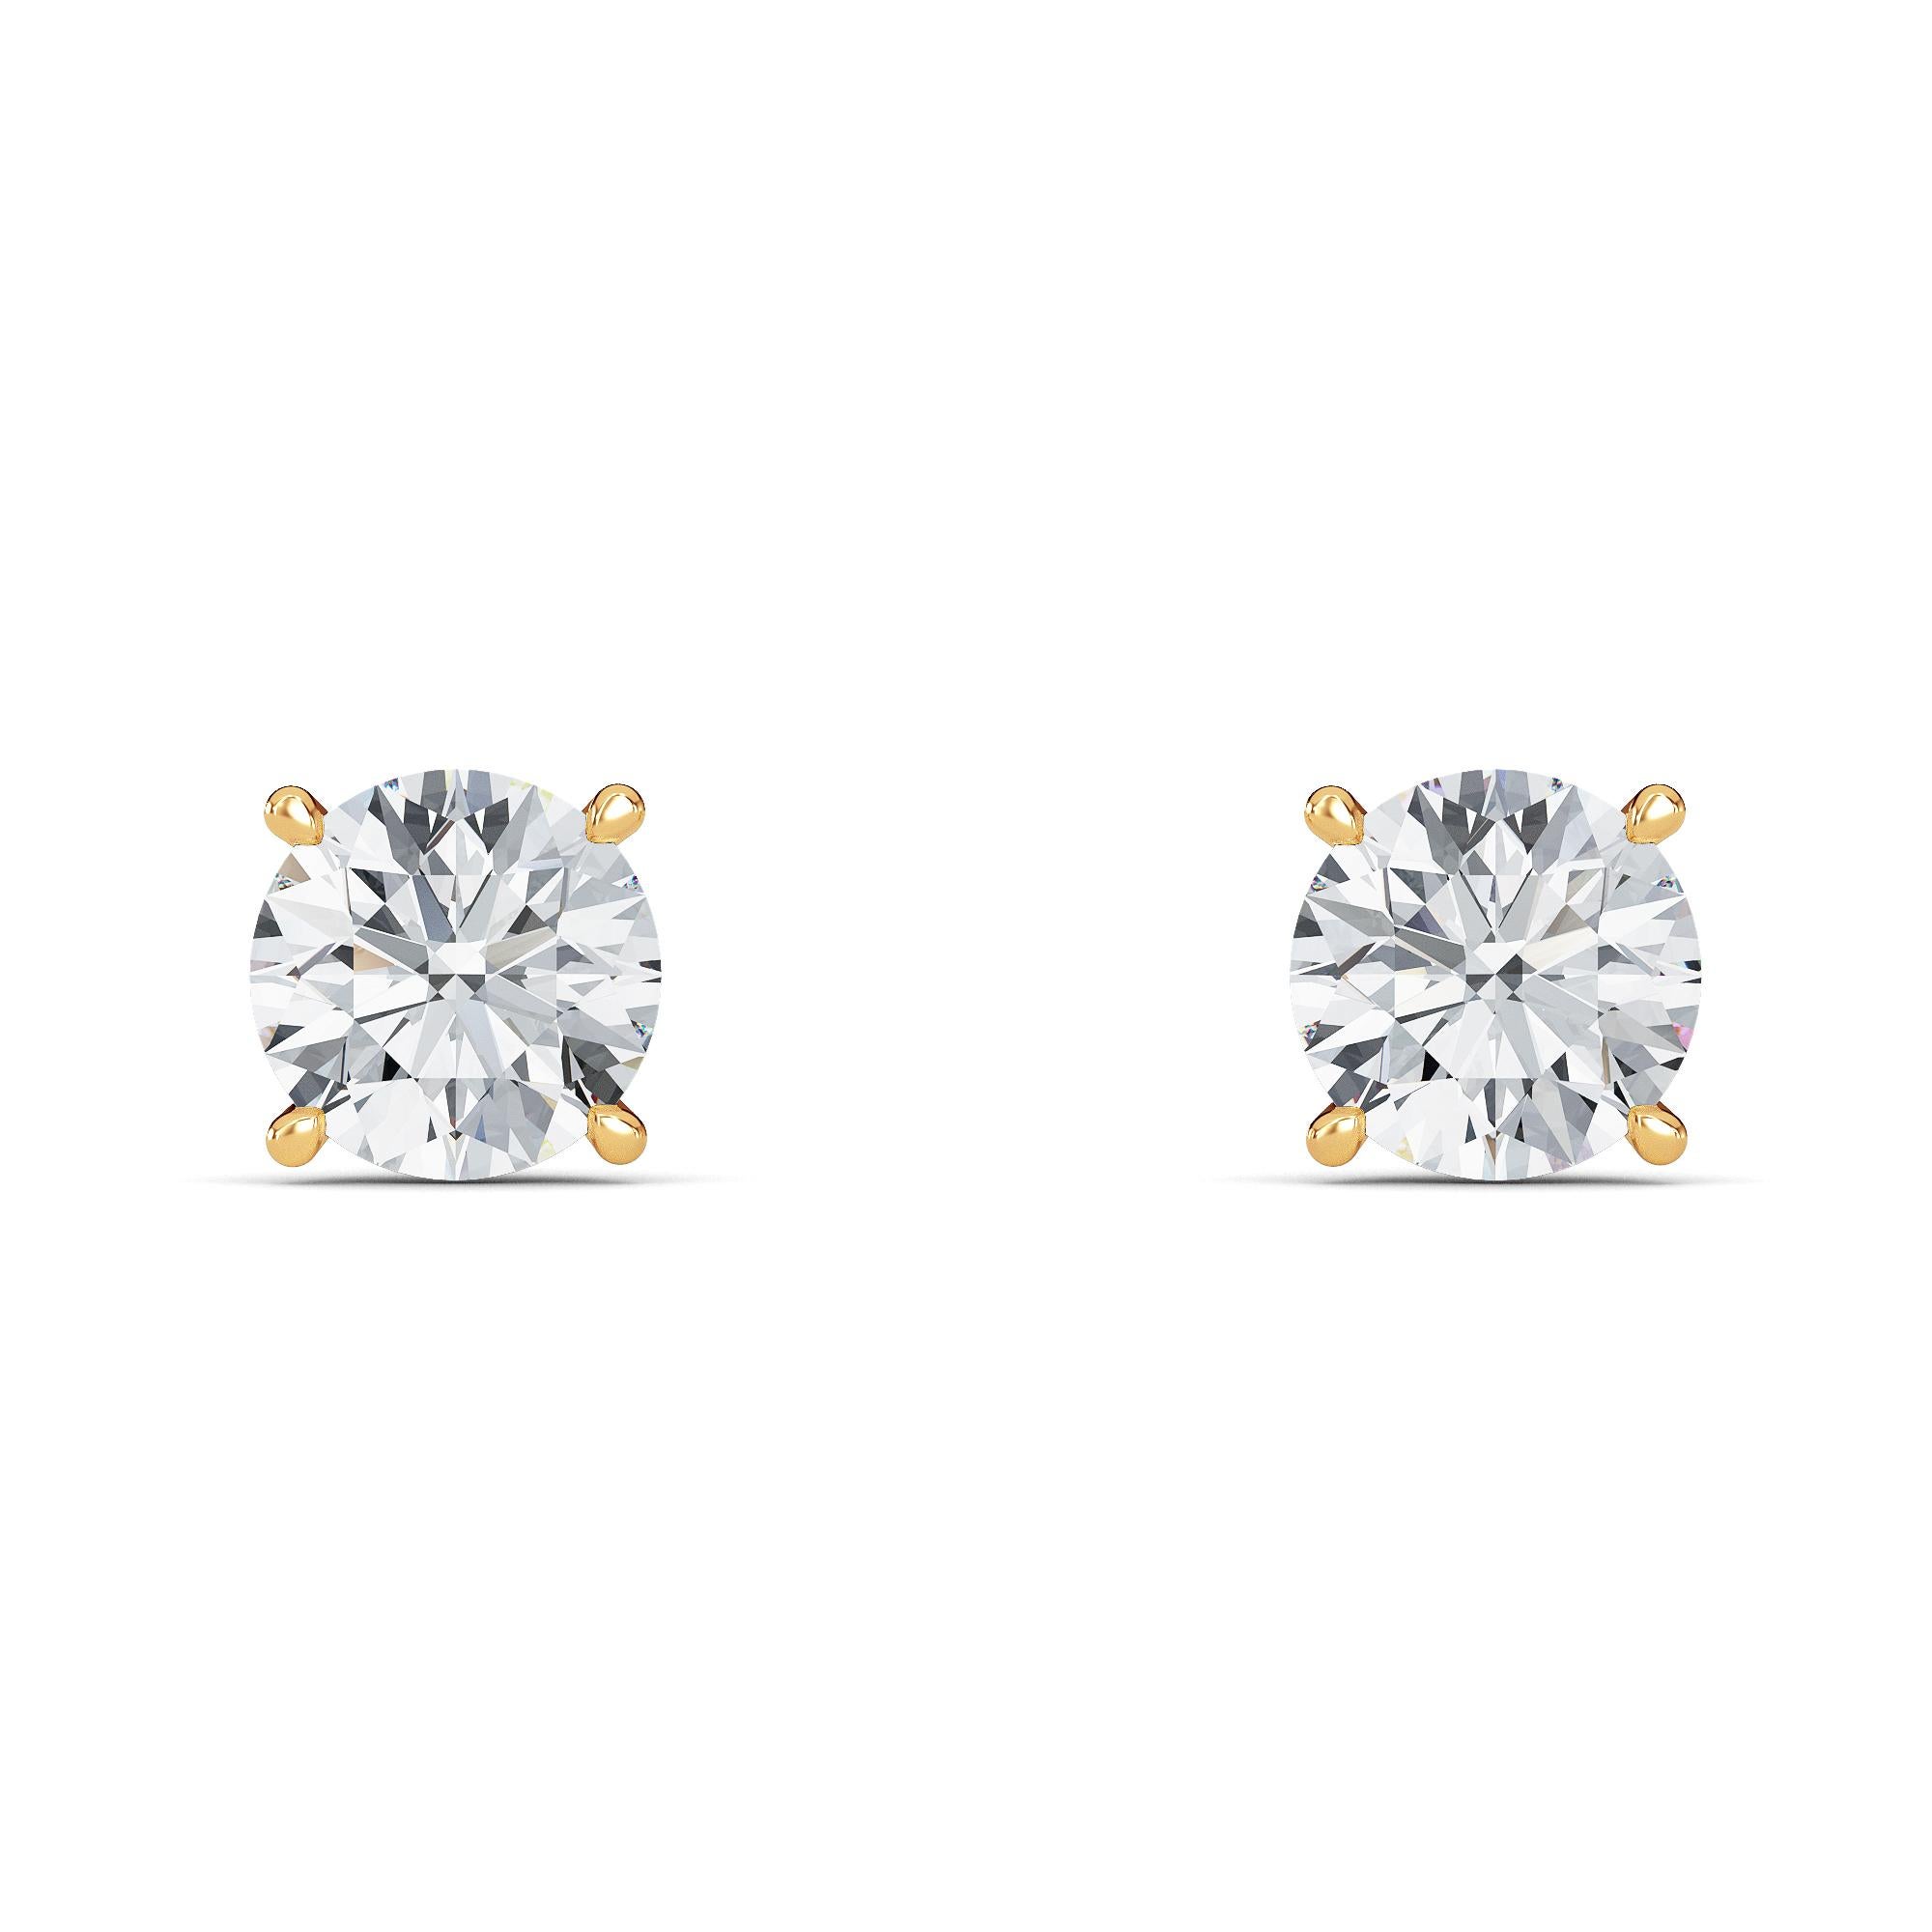 diamond solitaire earrings designs